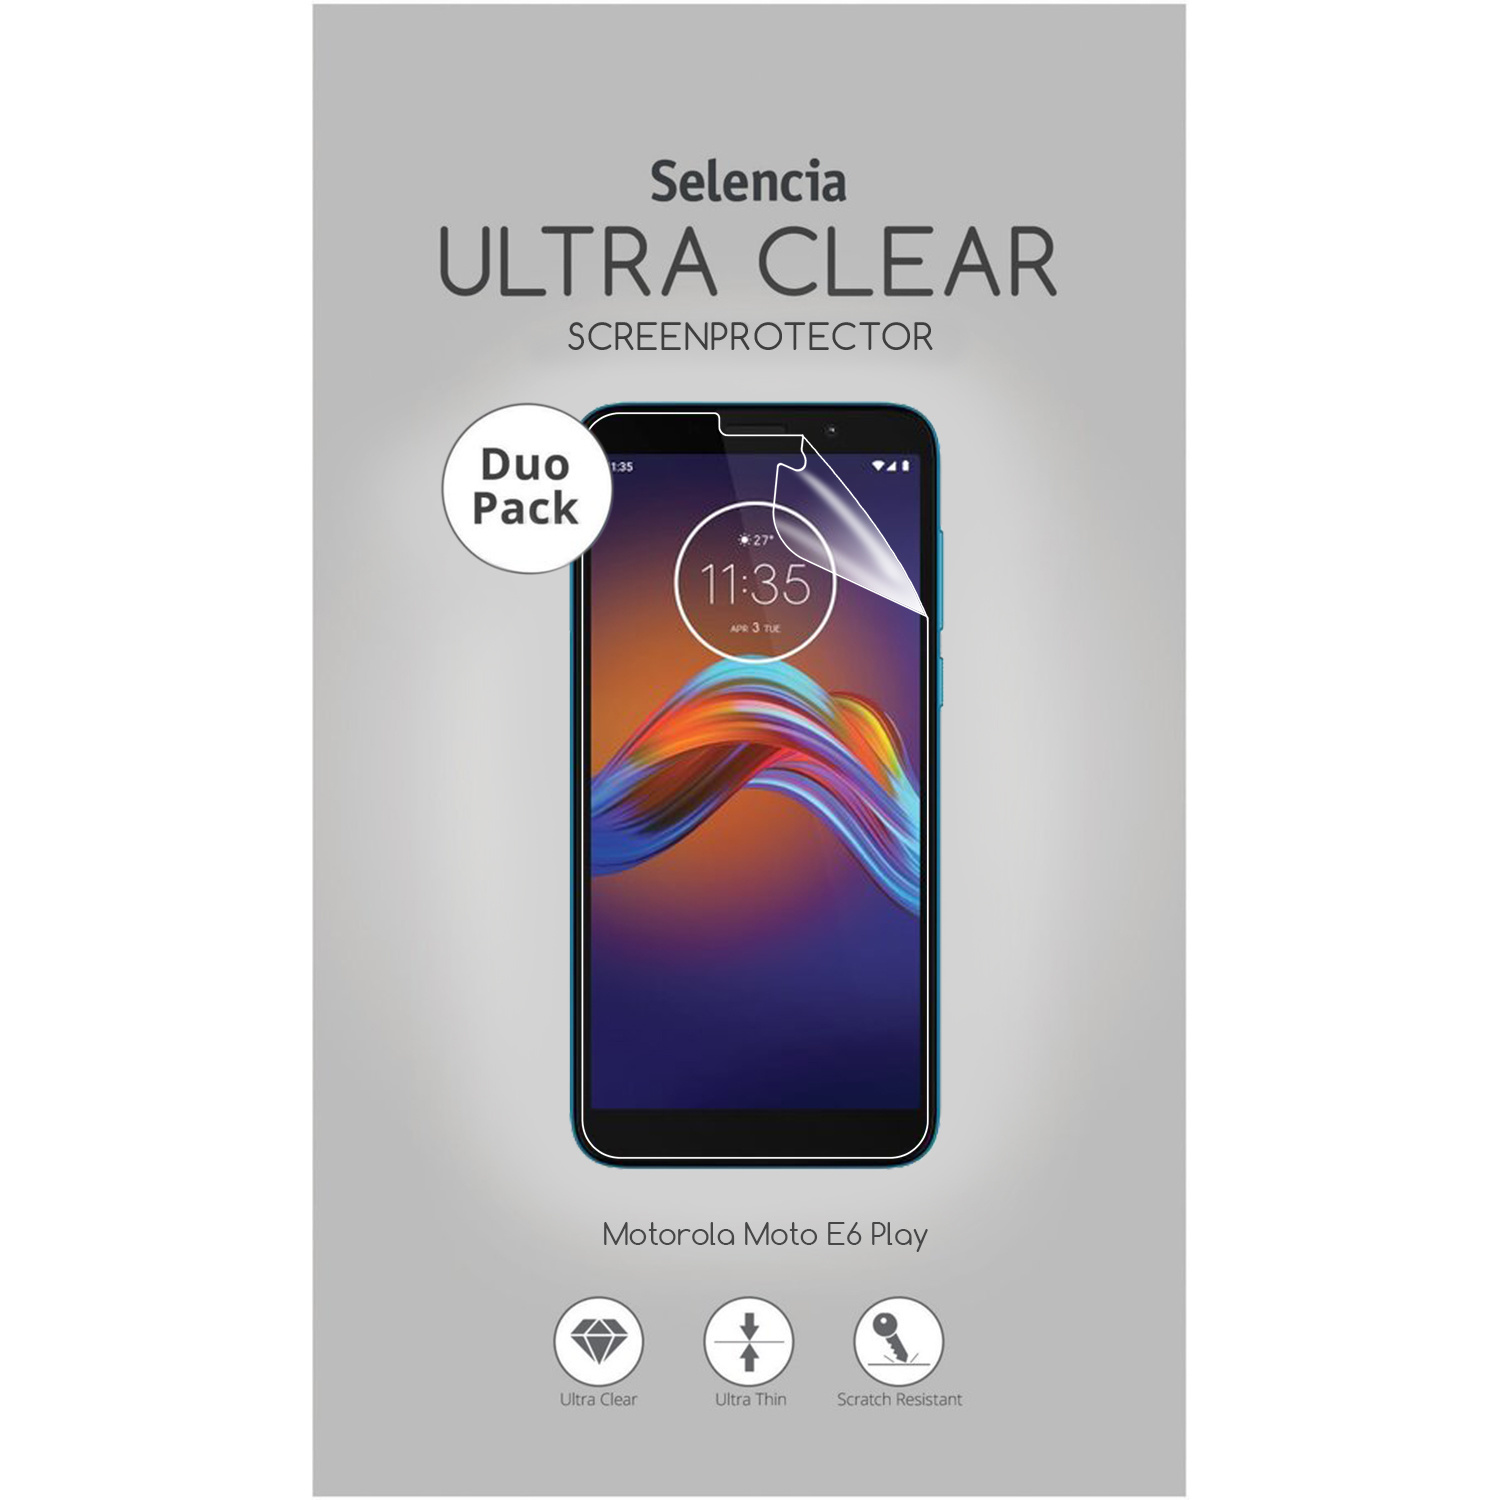 Selencia Pack Ultra Clear Screenprotector voor de Motorola Moto E6 Play